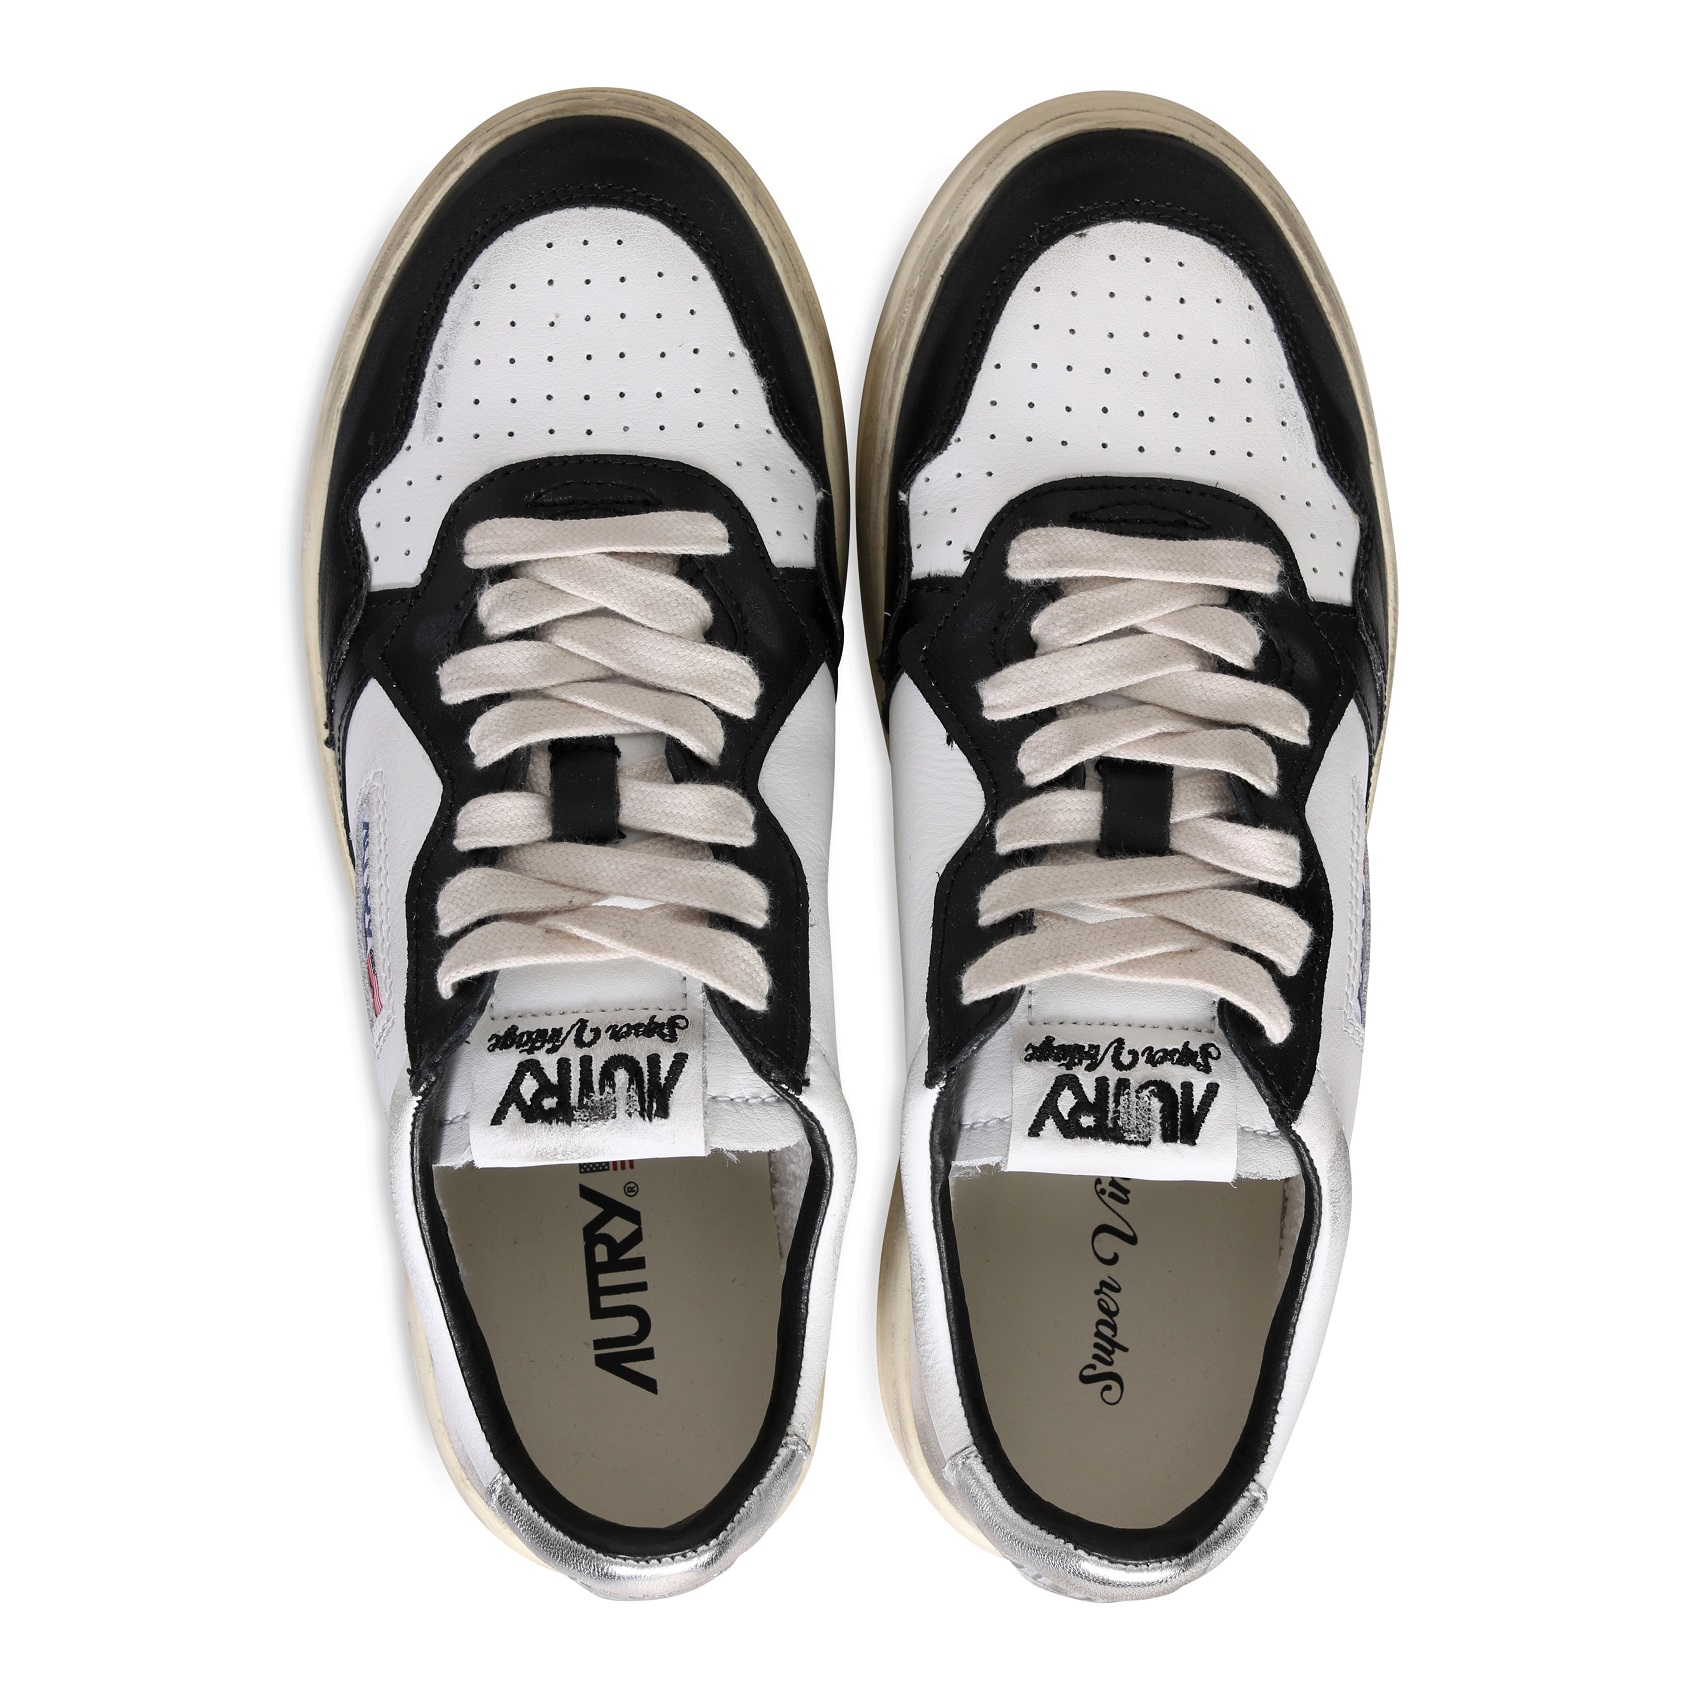 Autry Action Shoes Super Vintage Low Sneaker White/Black/Silver 41